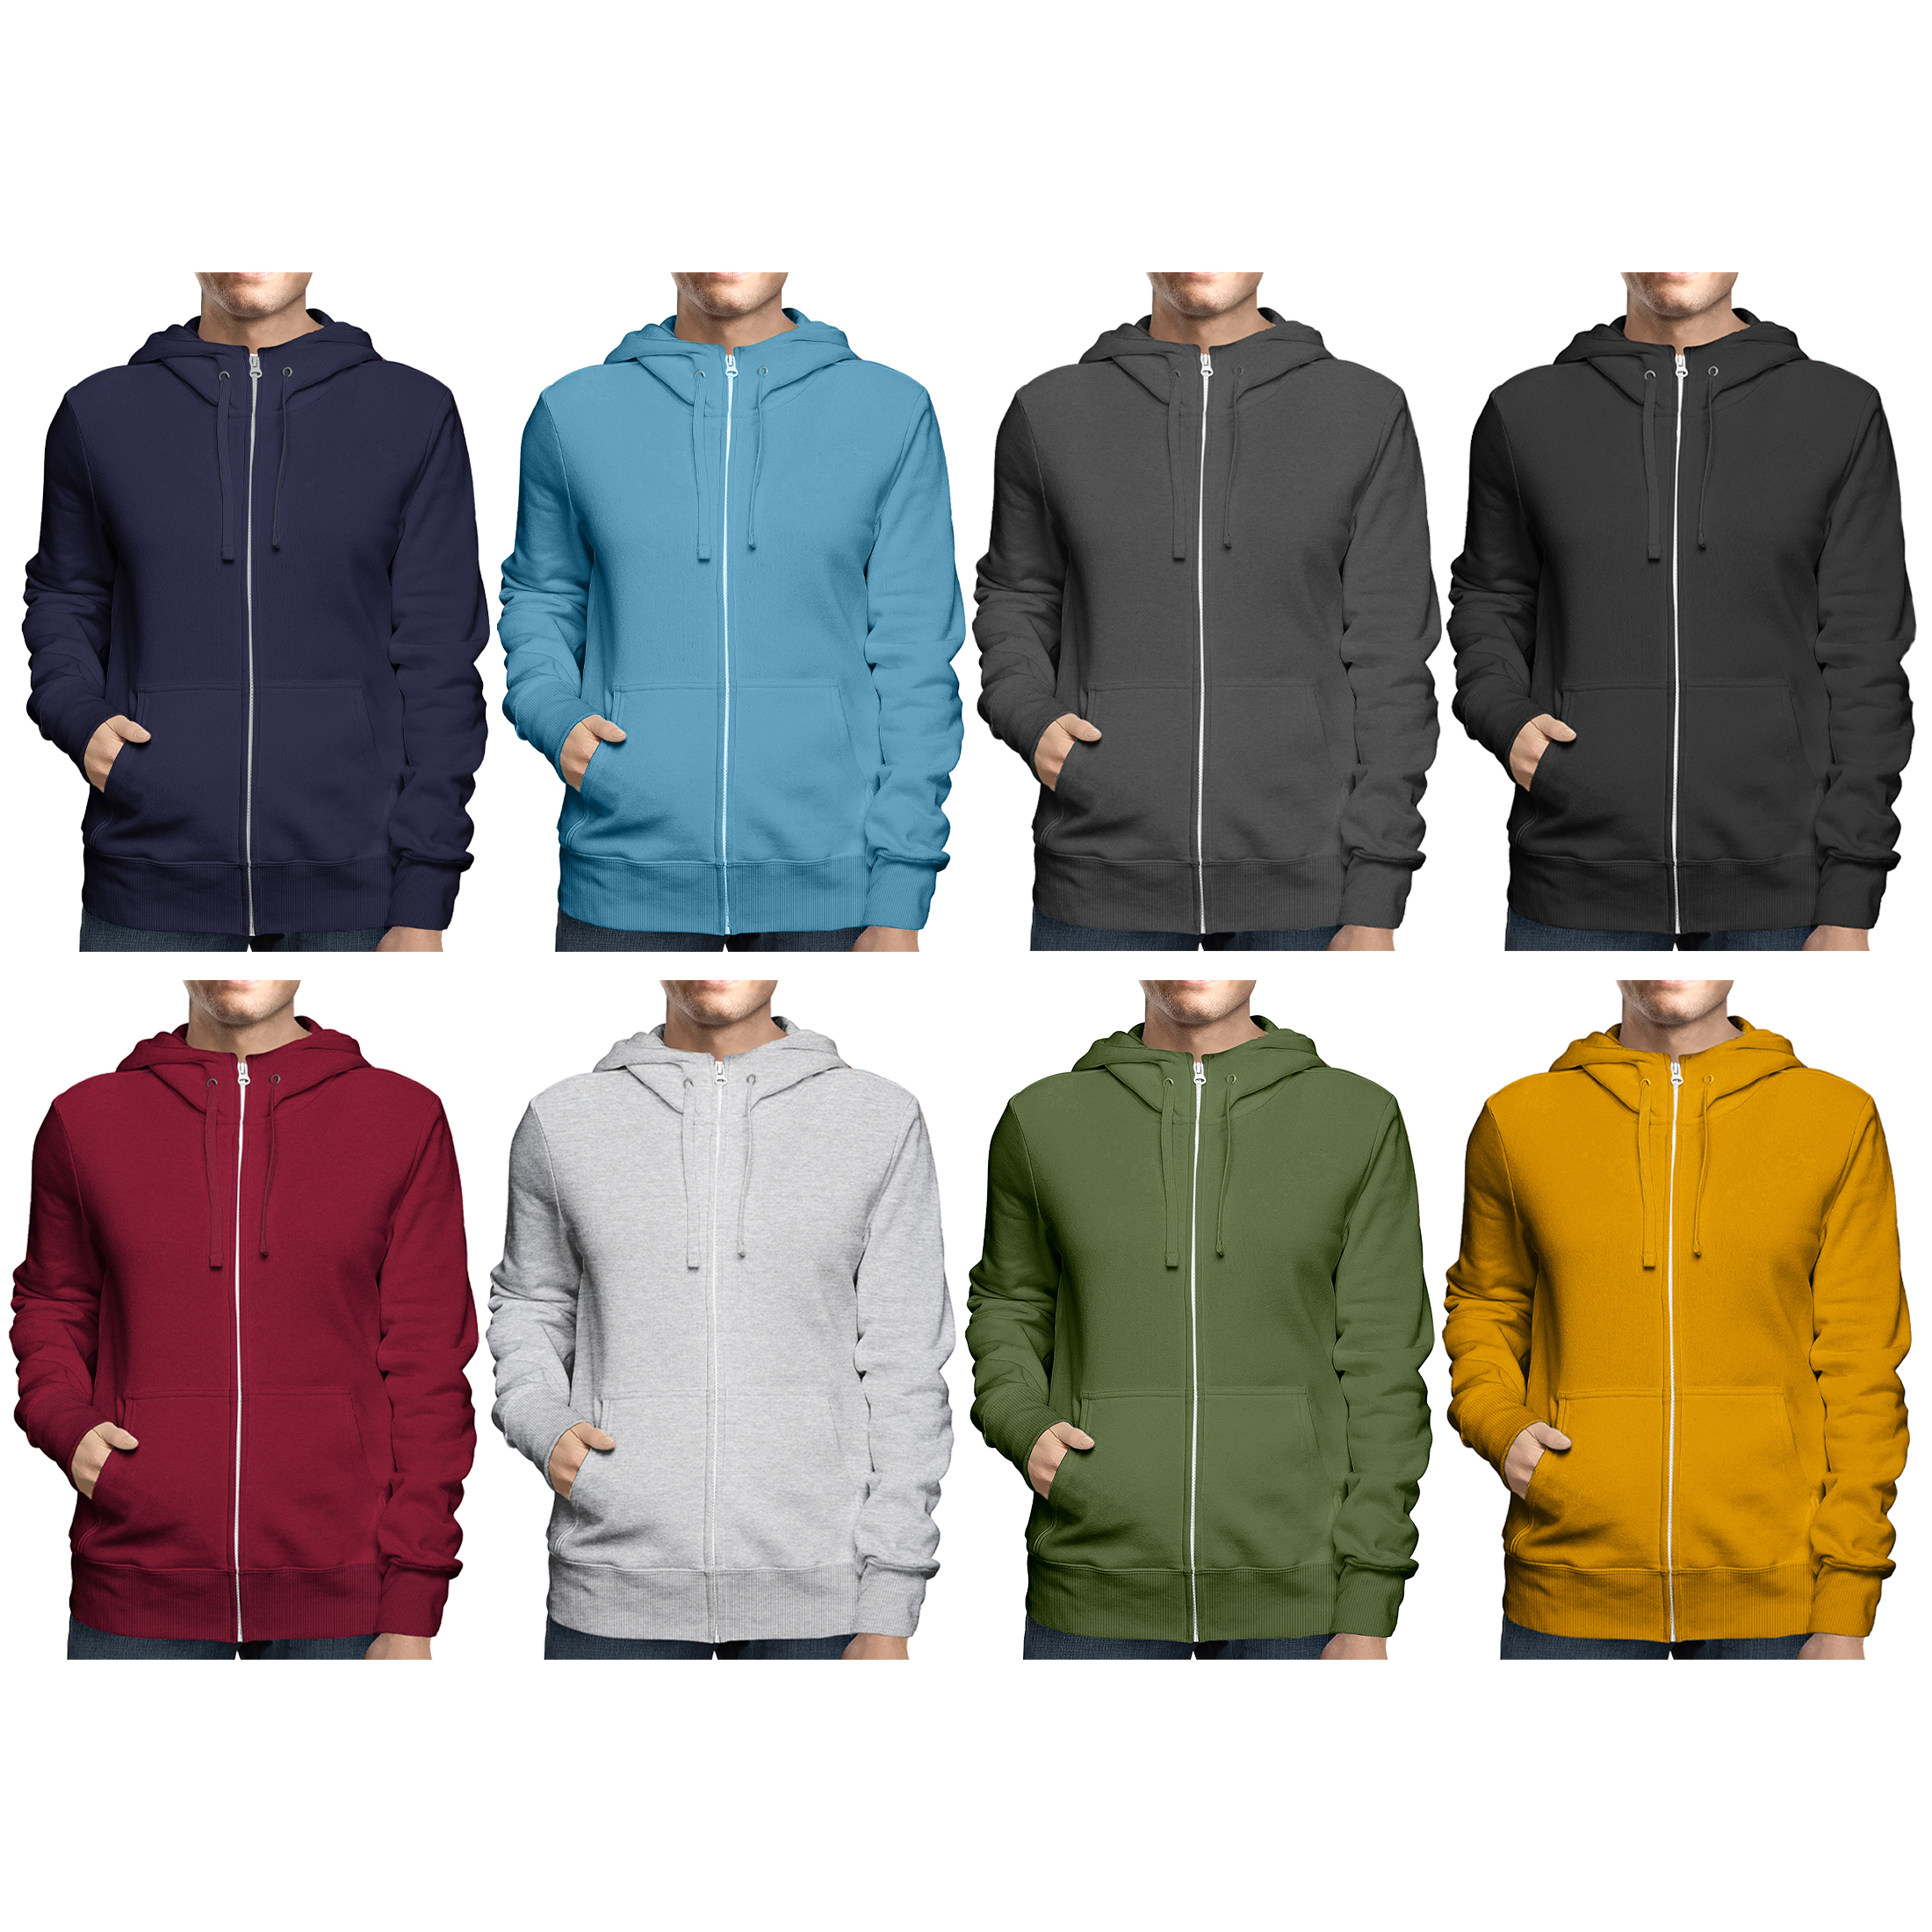 2-Pack: Men's Full Zip Up Fleece-Lined Hoodie Sweatshirt (Big & Tall Size Available) - Navy & Black, 2x-large